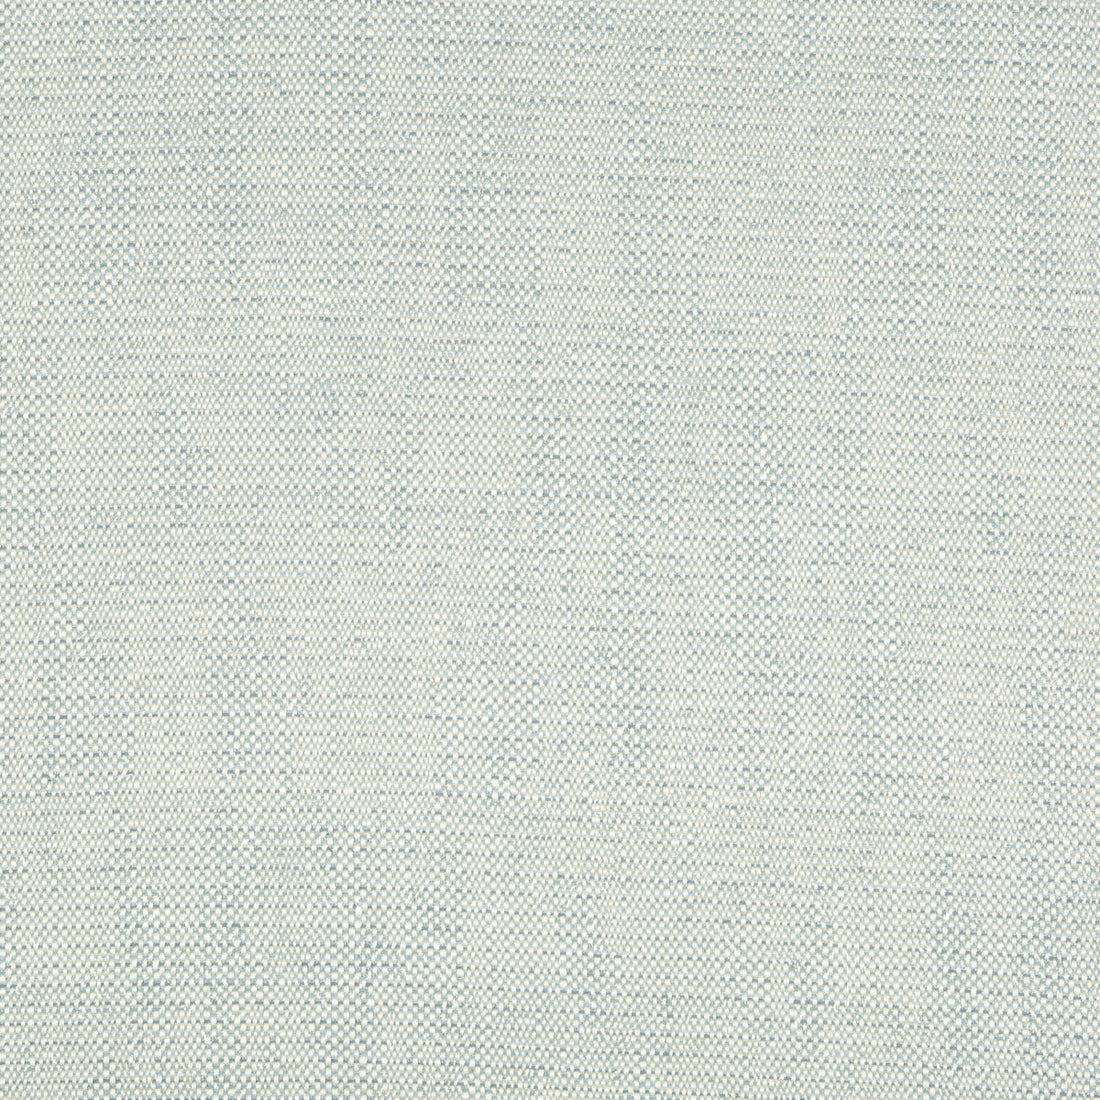 Kravet Design fabric in 34774-15 color - pattern 34774.15.0 - by Kravet Design in the Gis collection